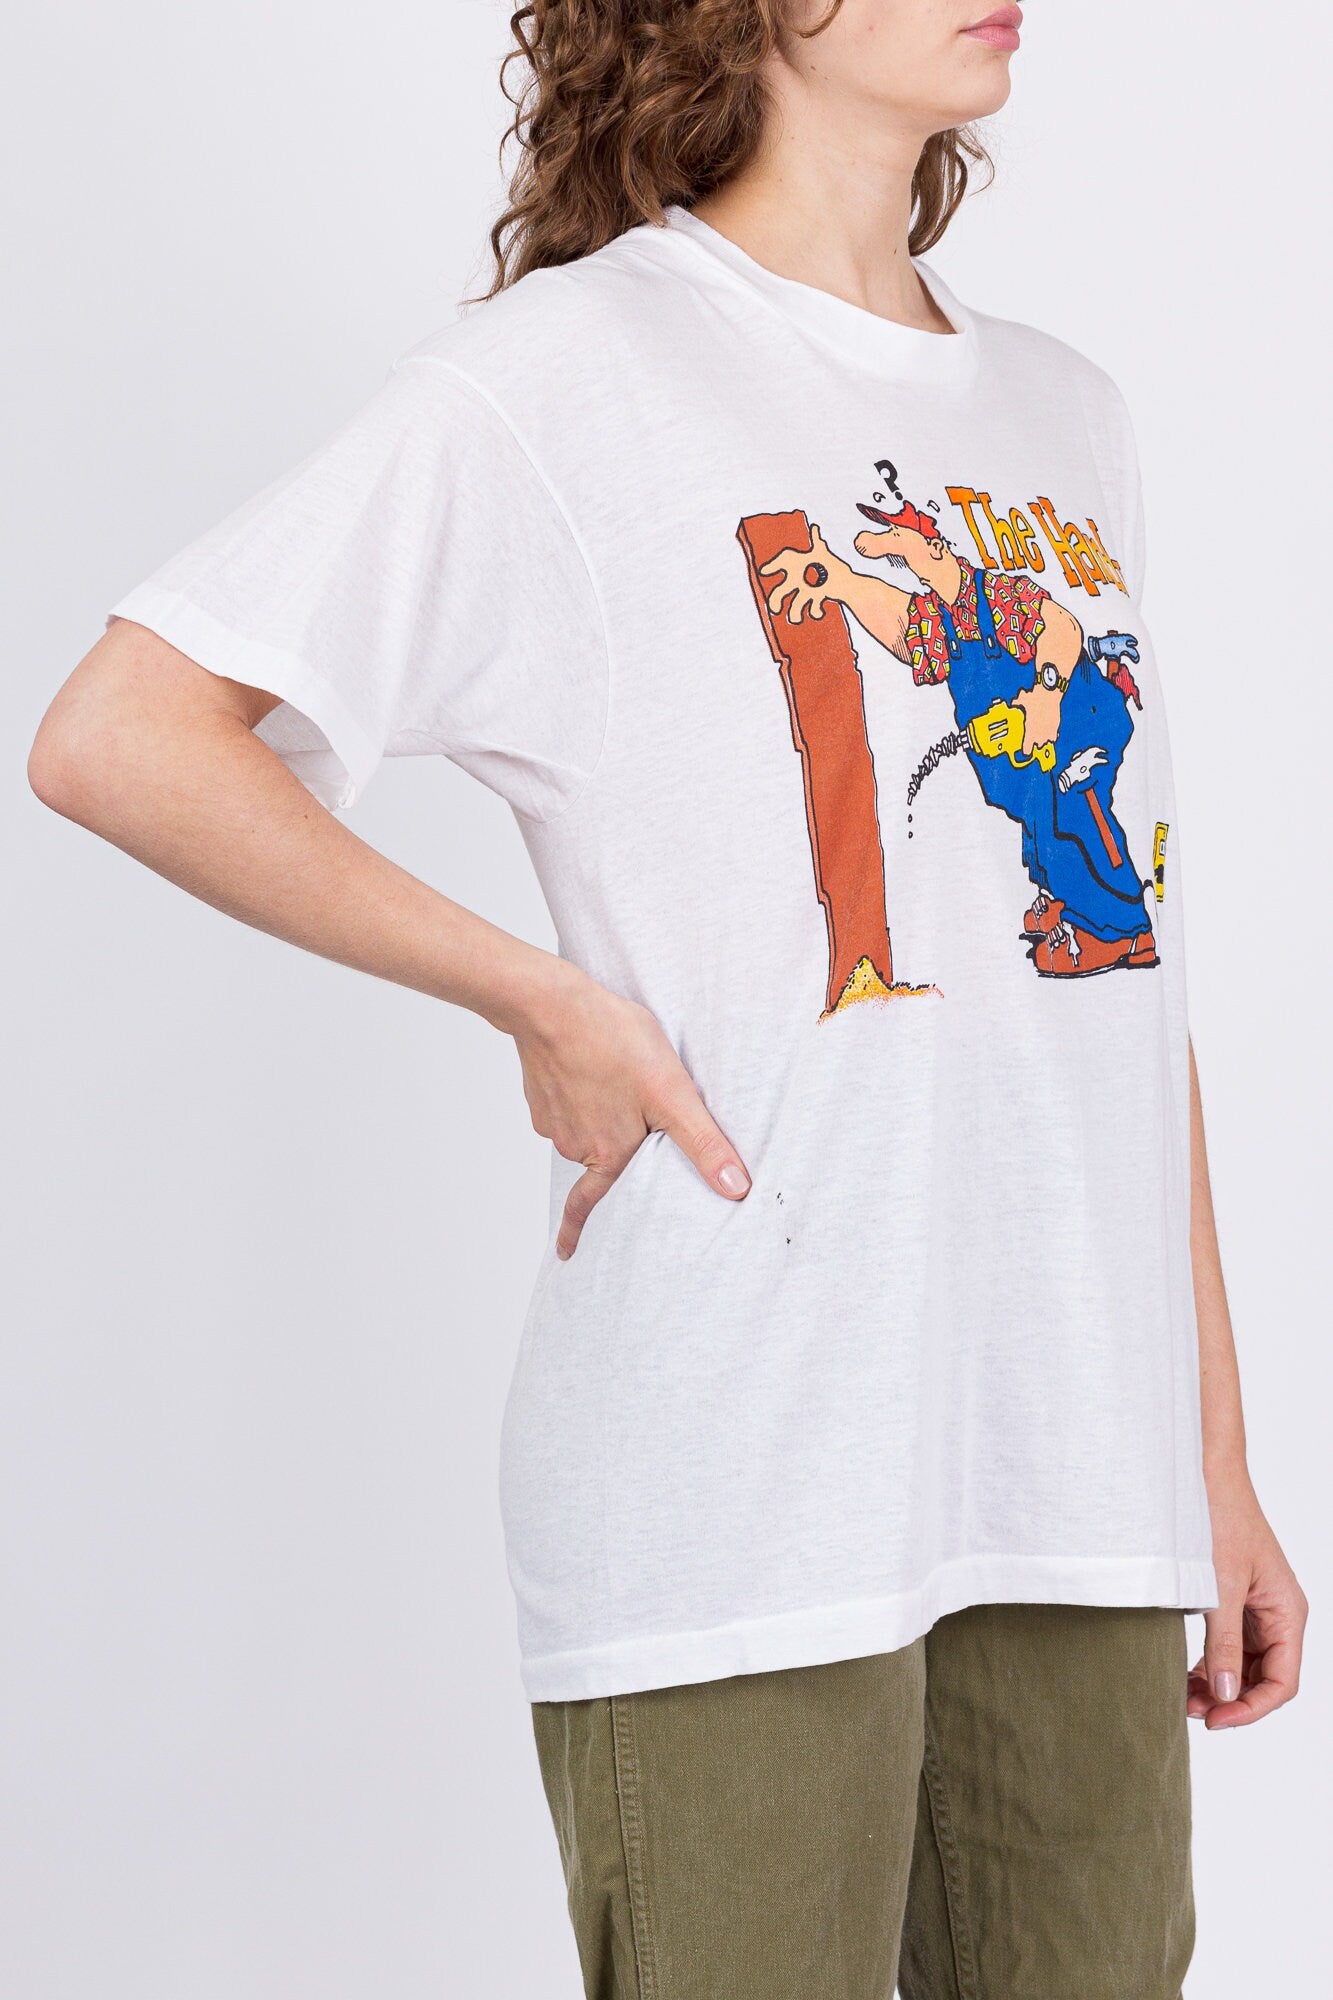 80s "The Handyman" Cartoon T Shirt - Unisex Large 